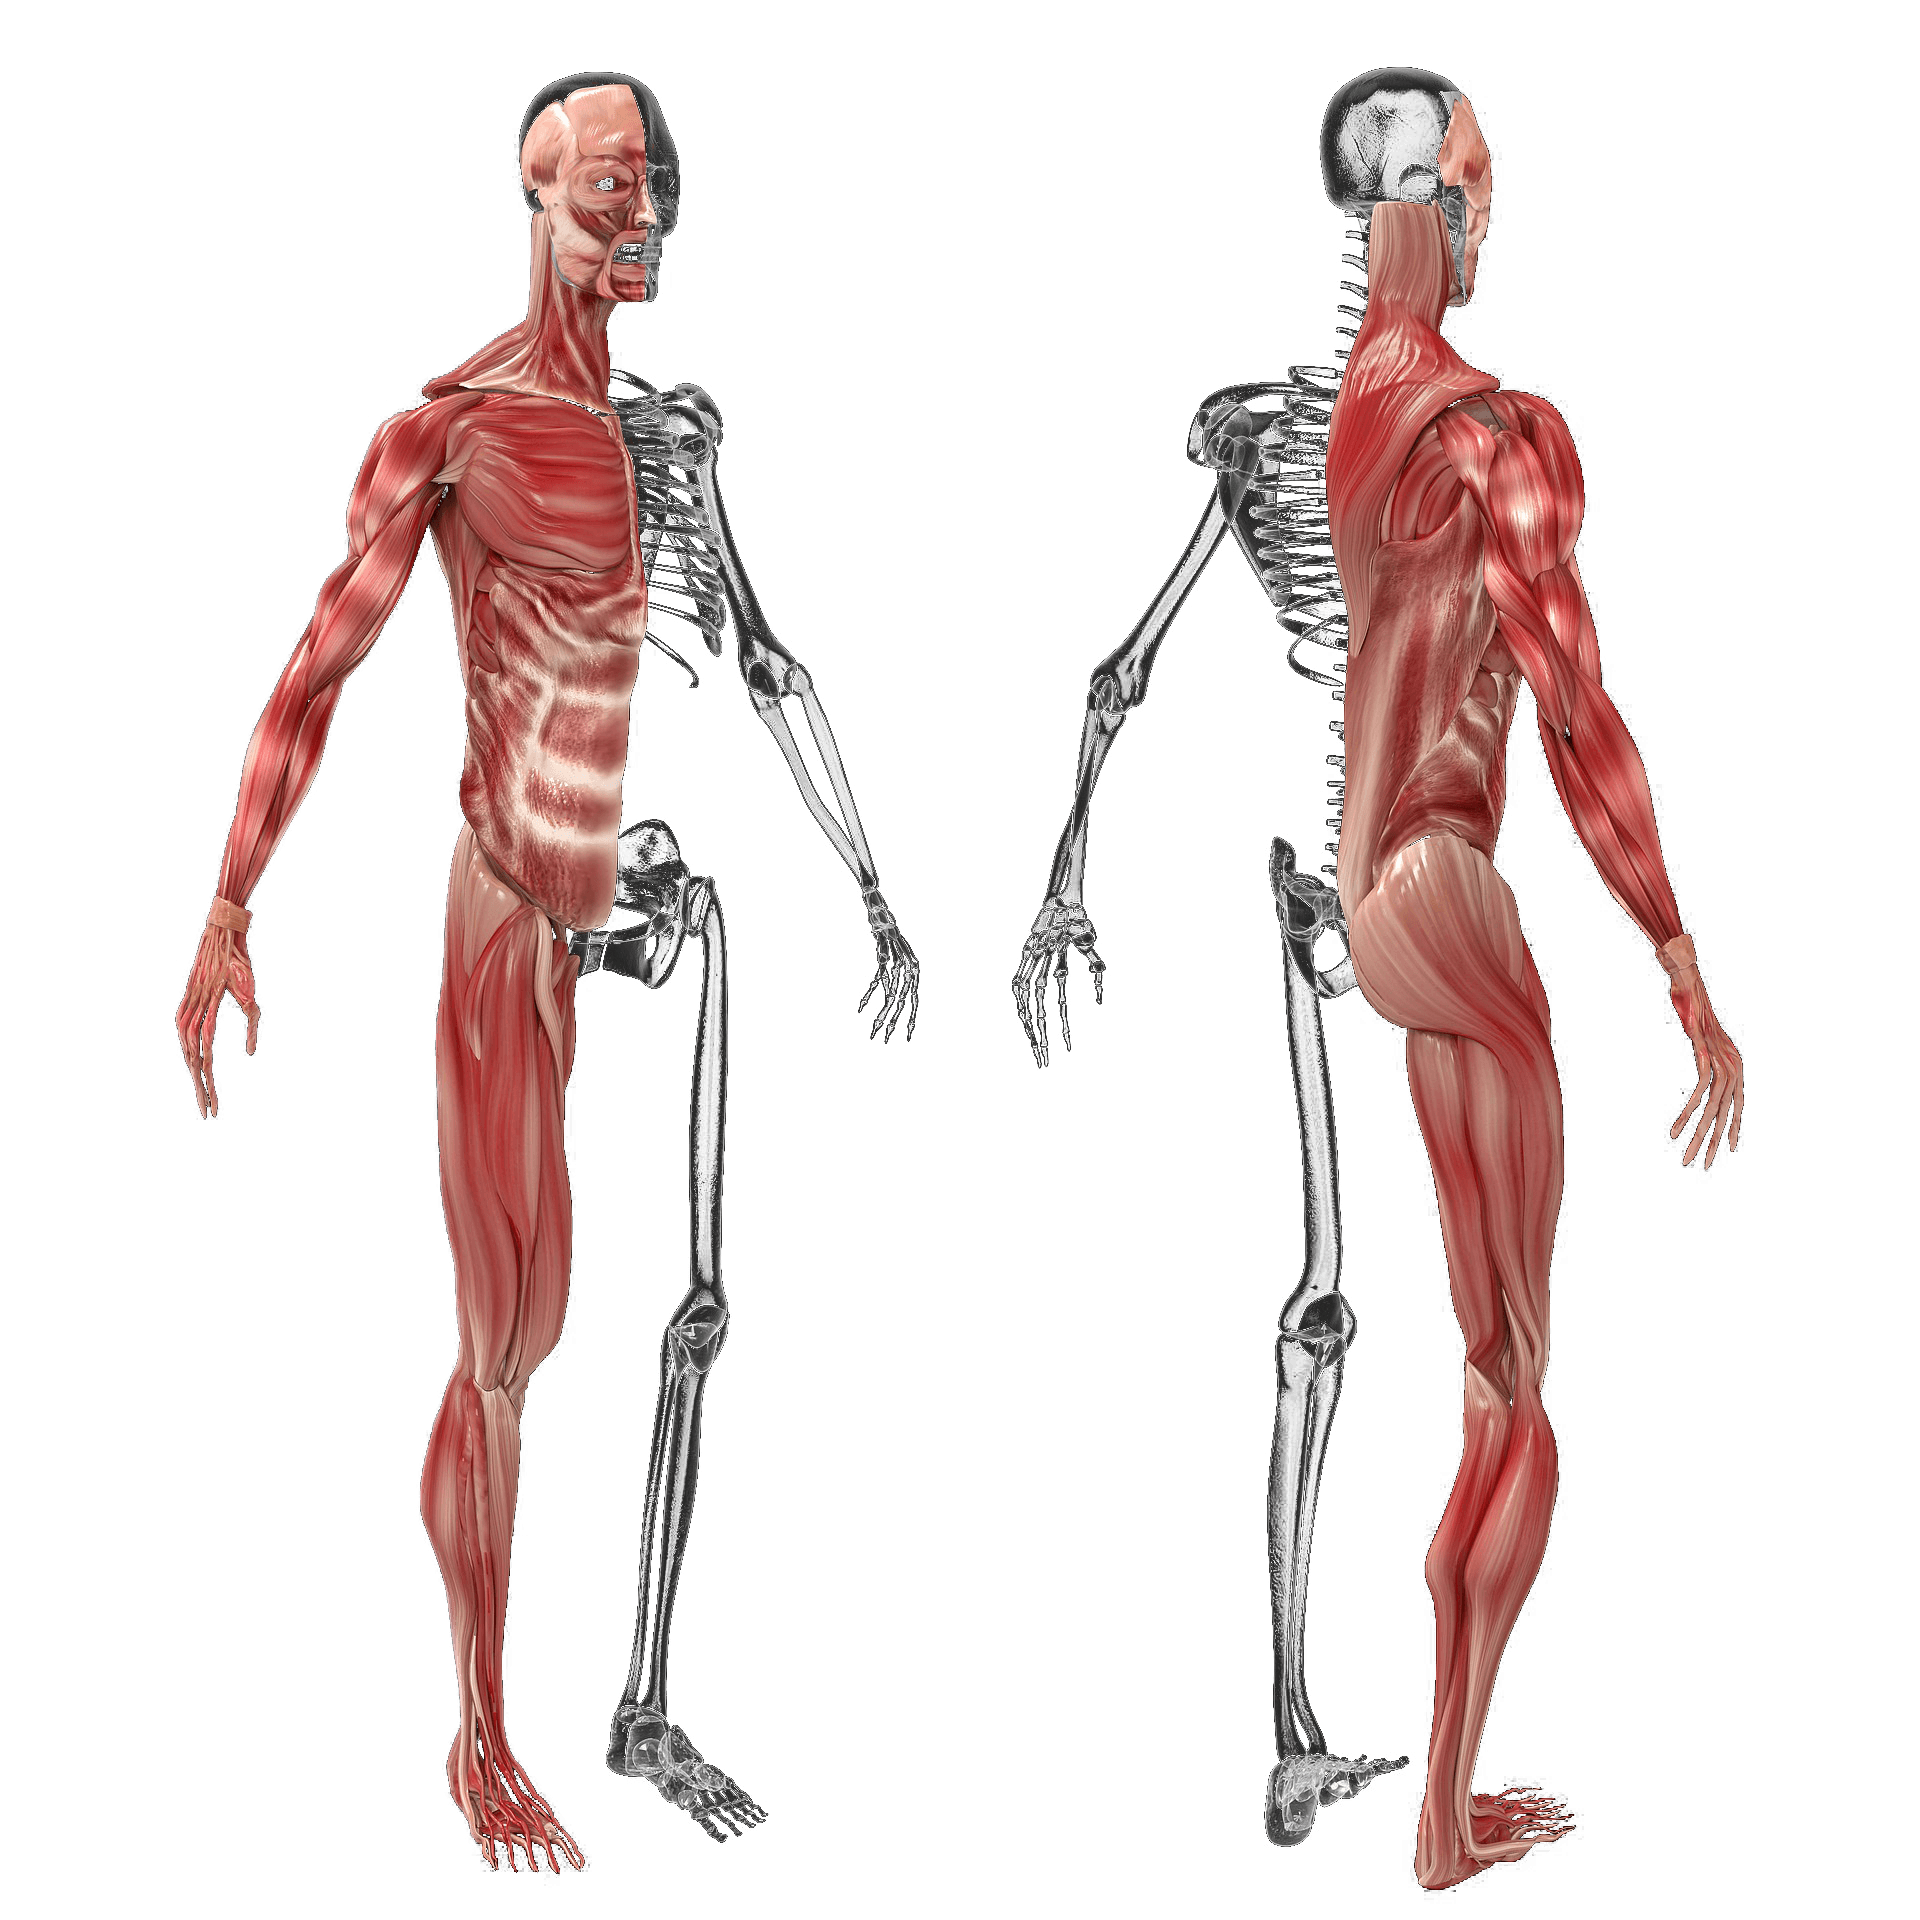 Basics of anatomy